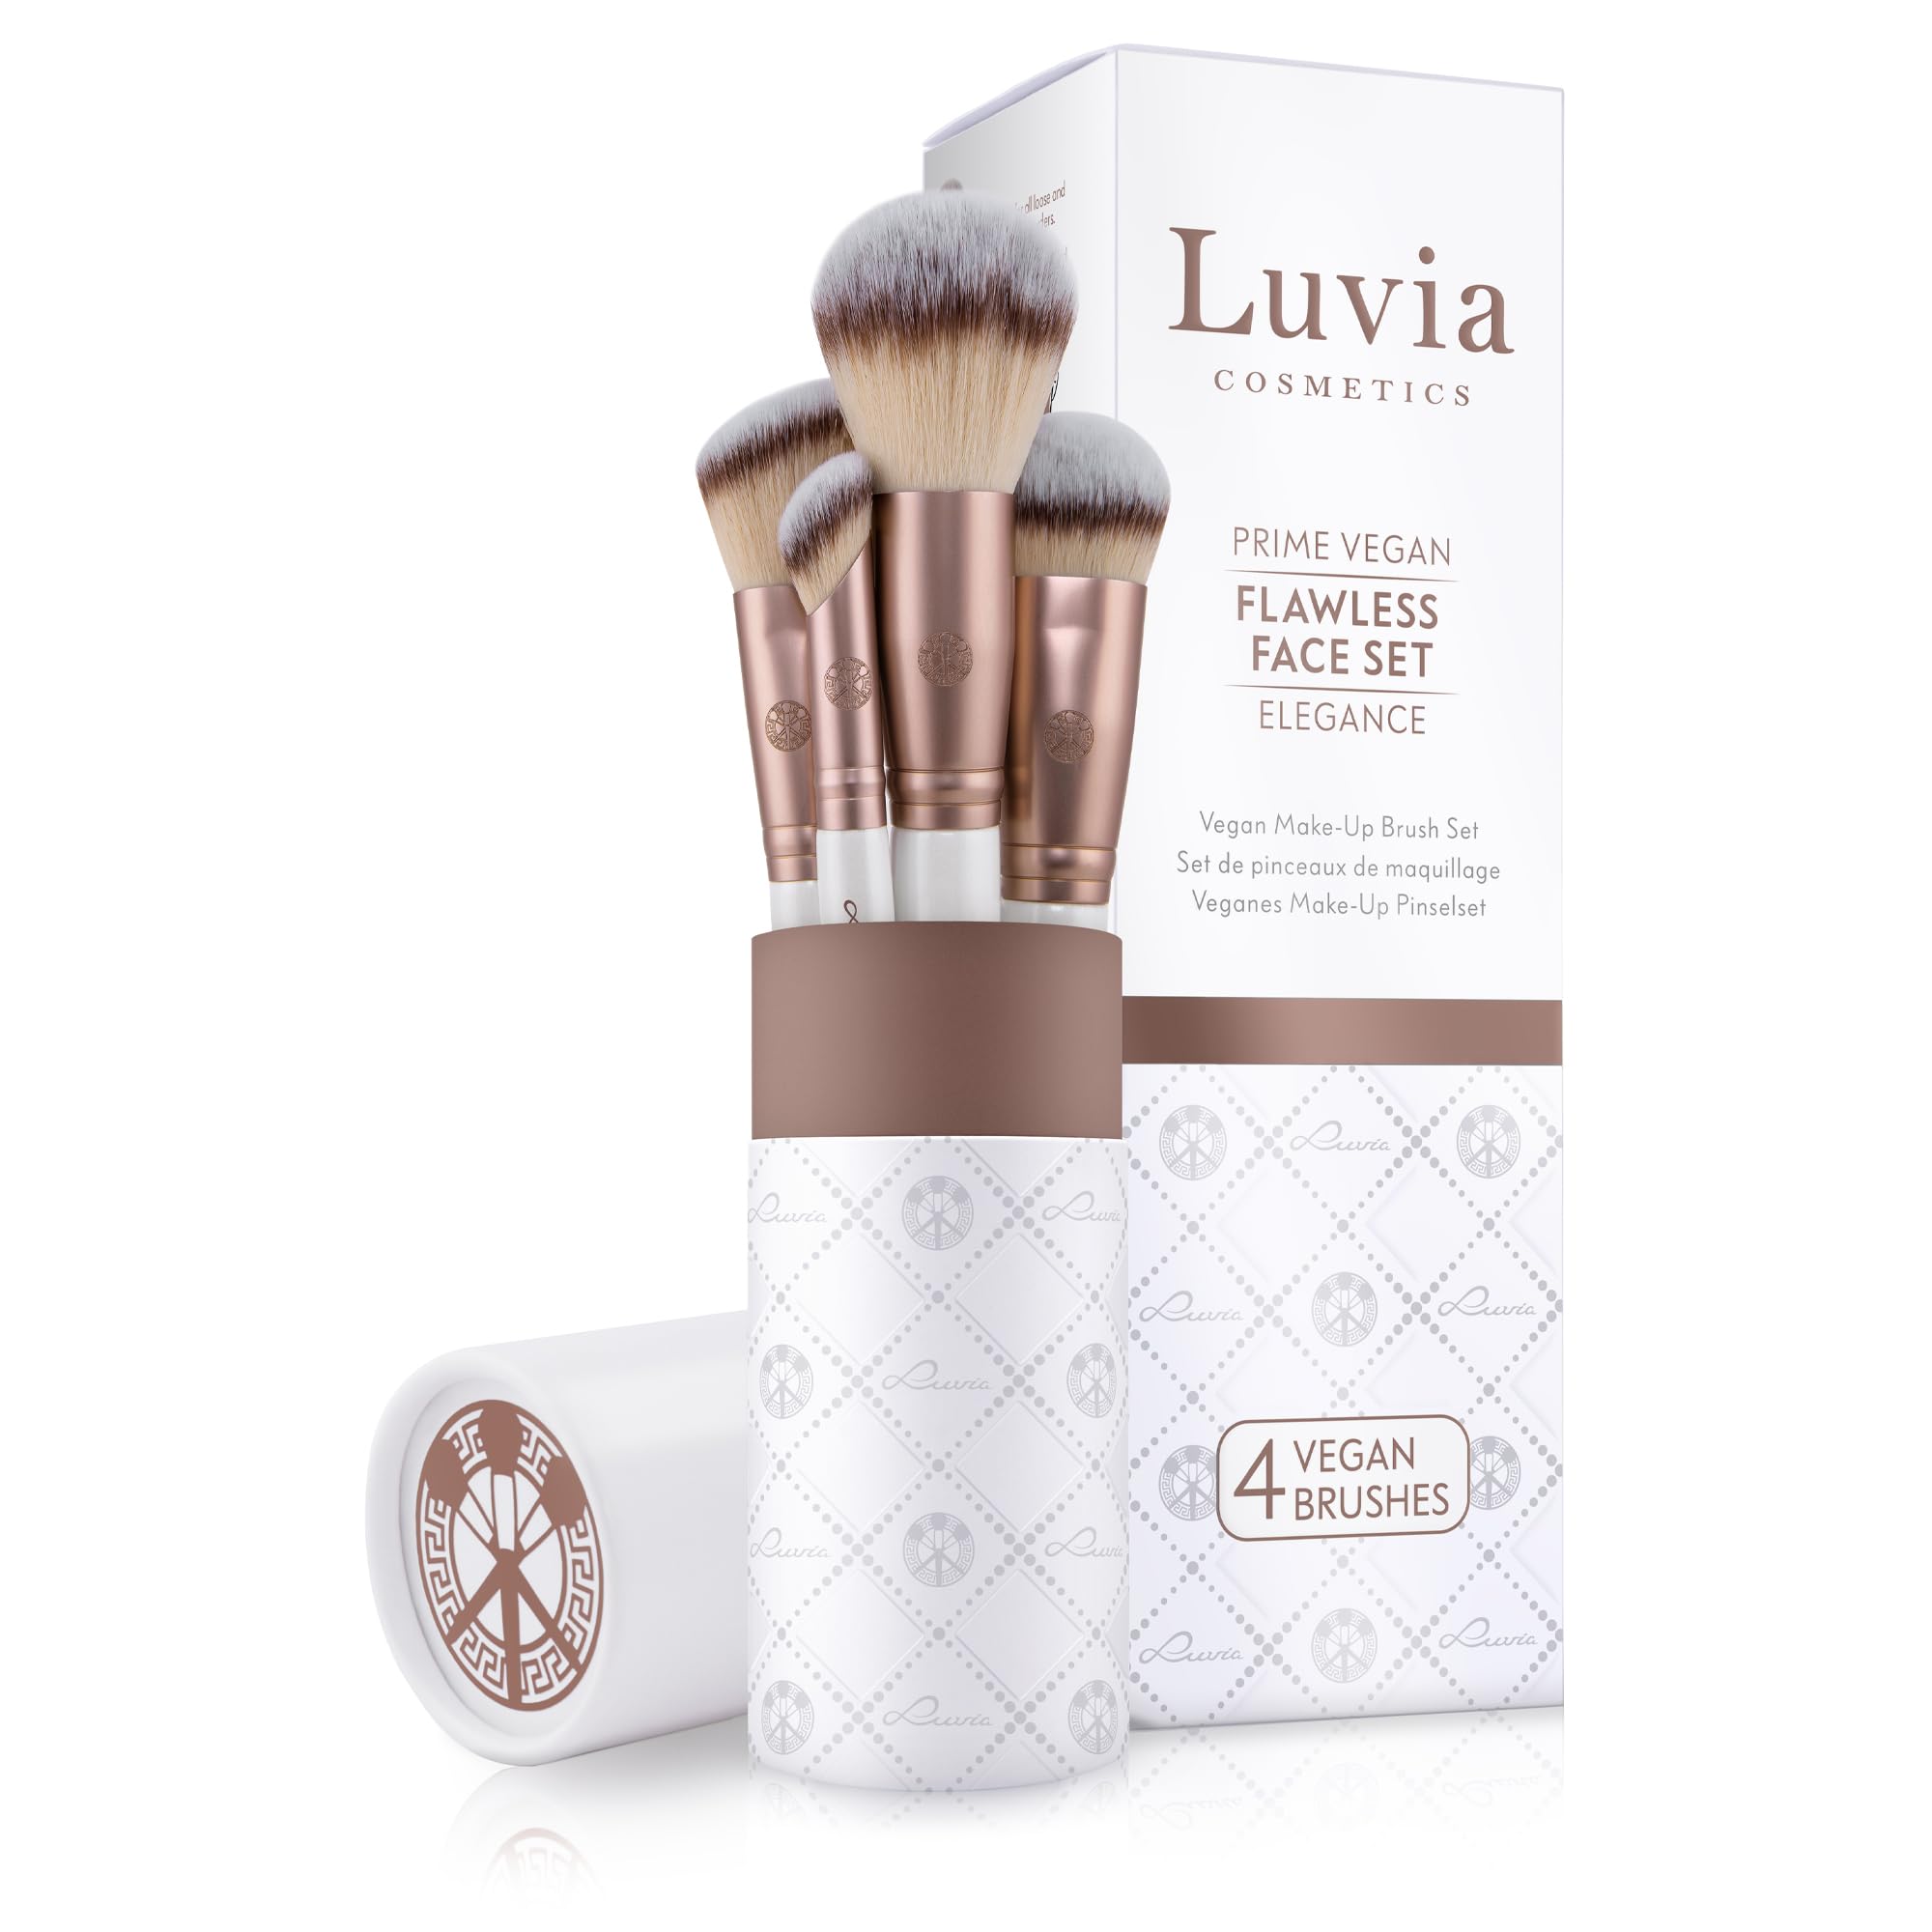 Make-Up Pinselset Luvia, Flawless Face Brush Set, Gesichtspinsel-Set, 4 Vegane Kosmetikpinsel, Schminkpinsel